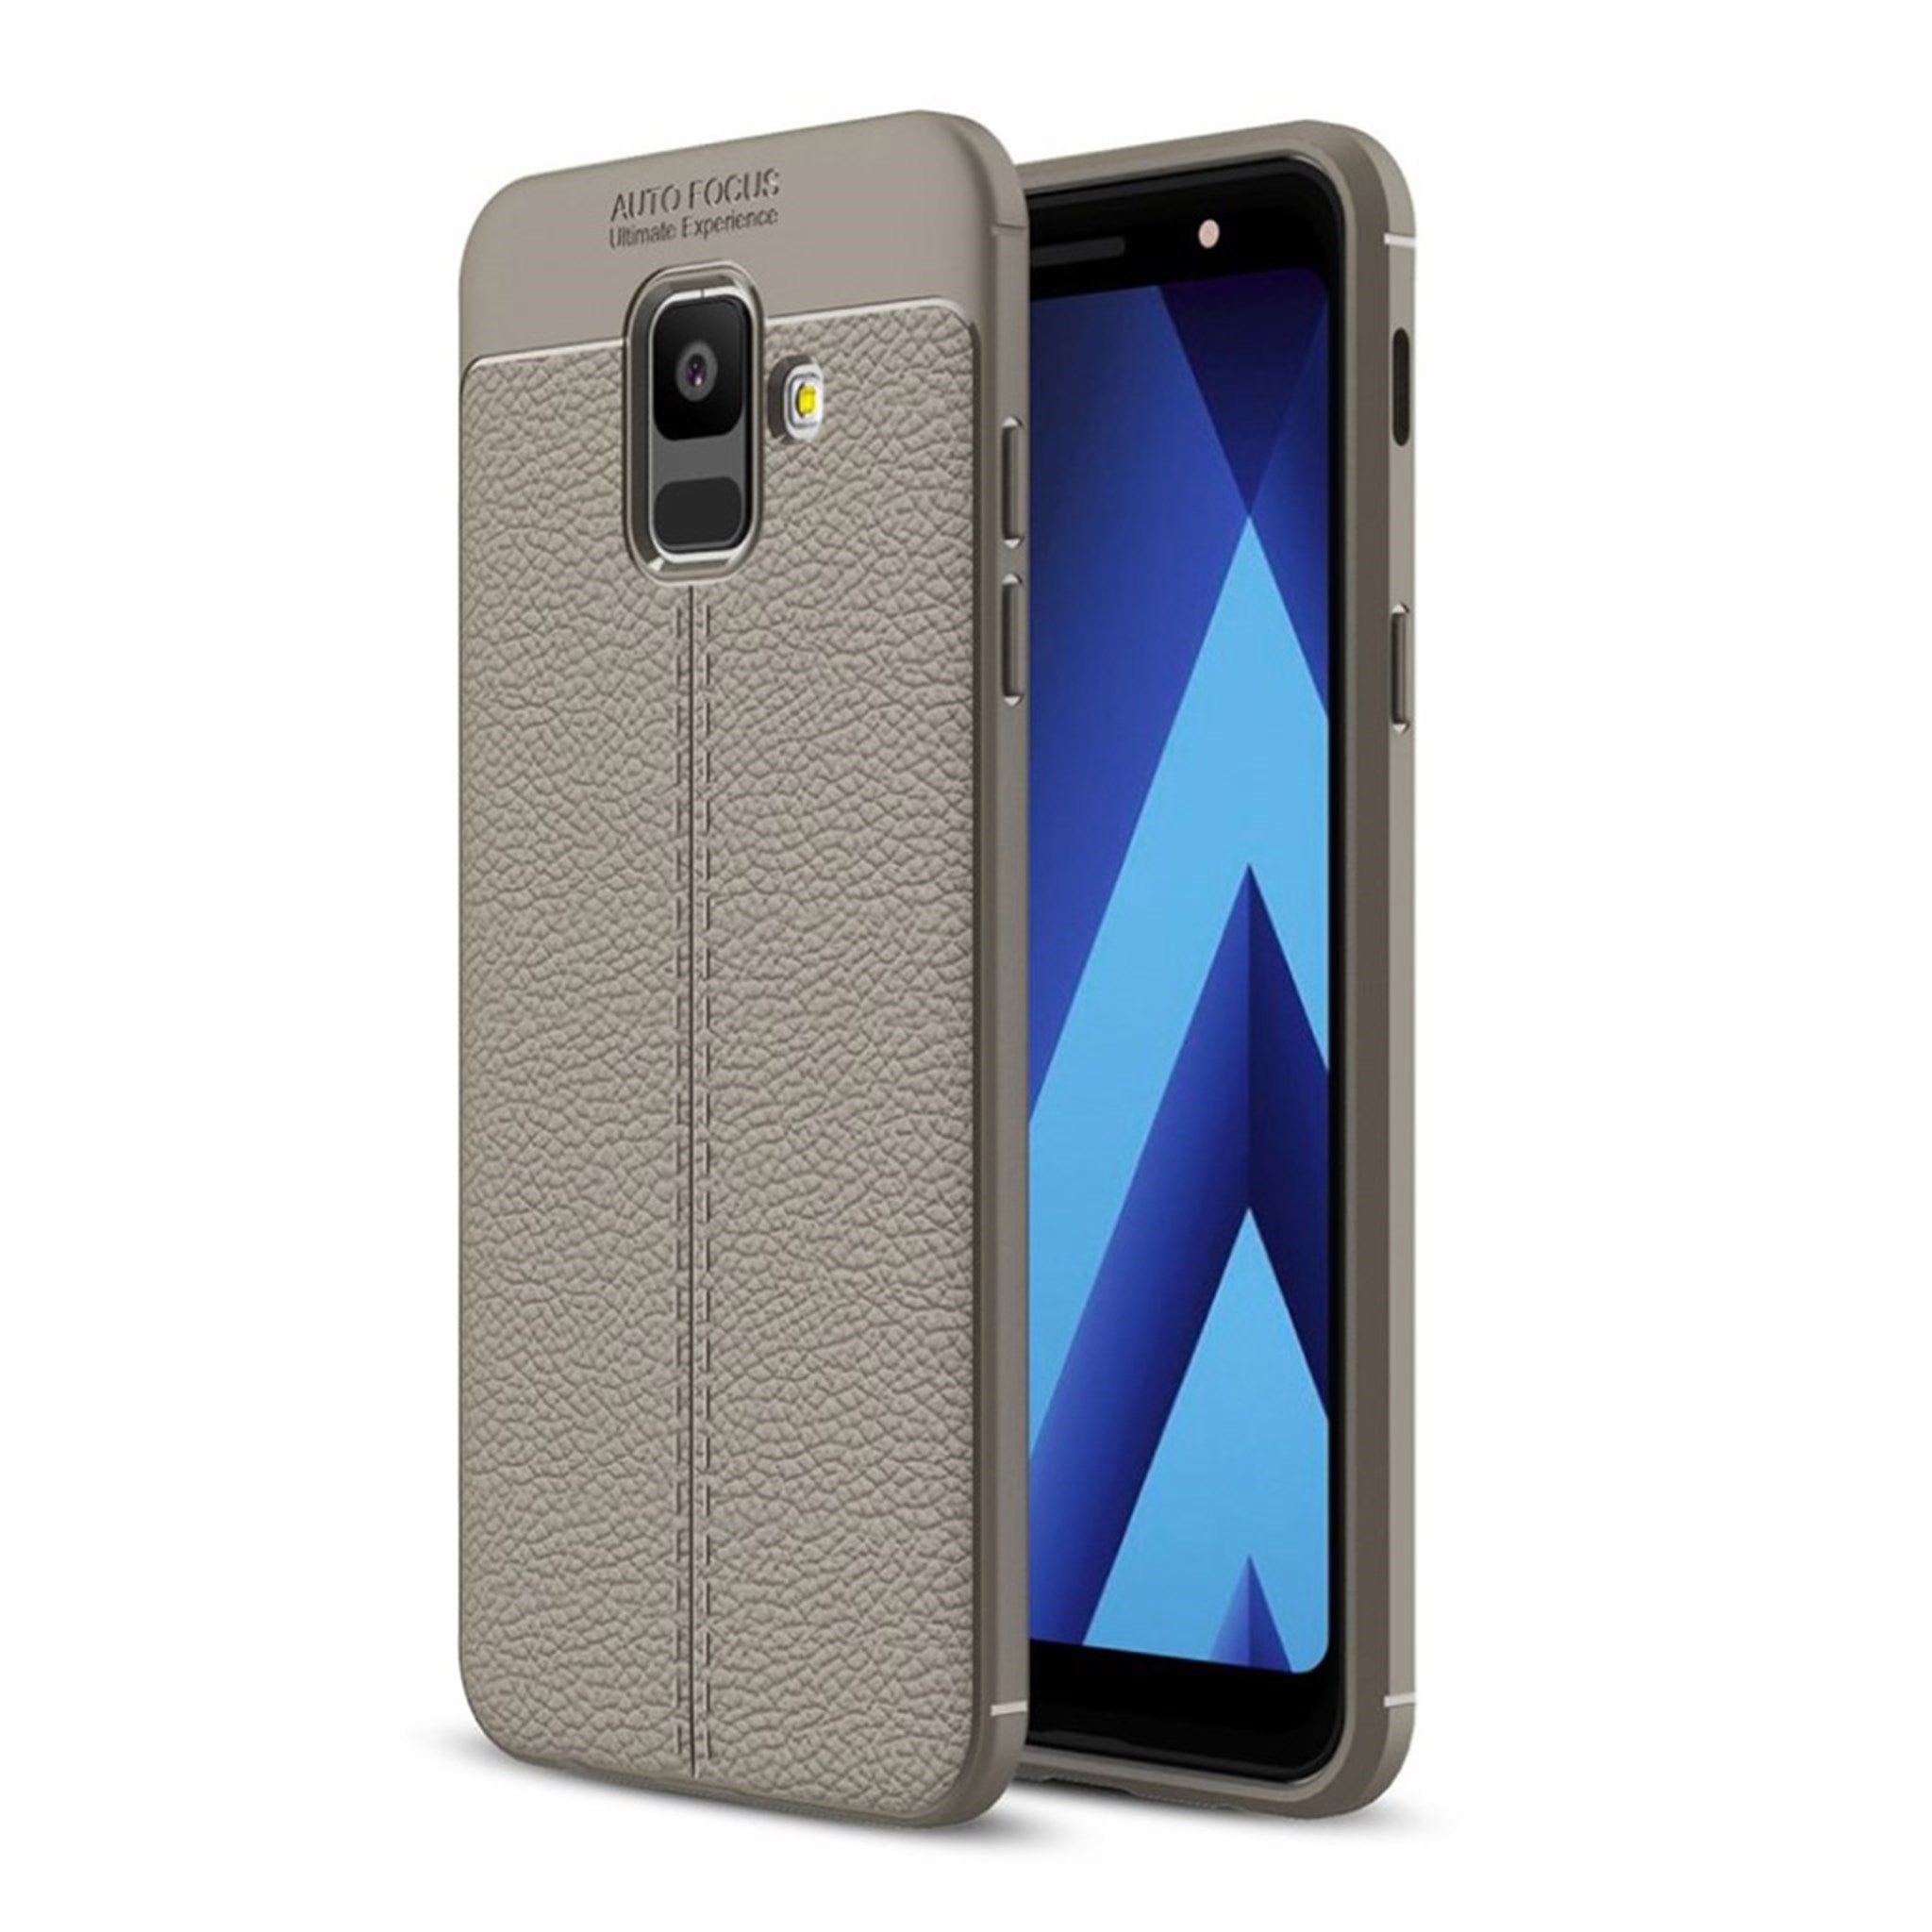 Samsung Galaxy A6 litchi texture case - Grey